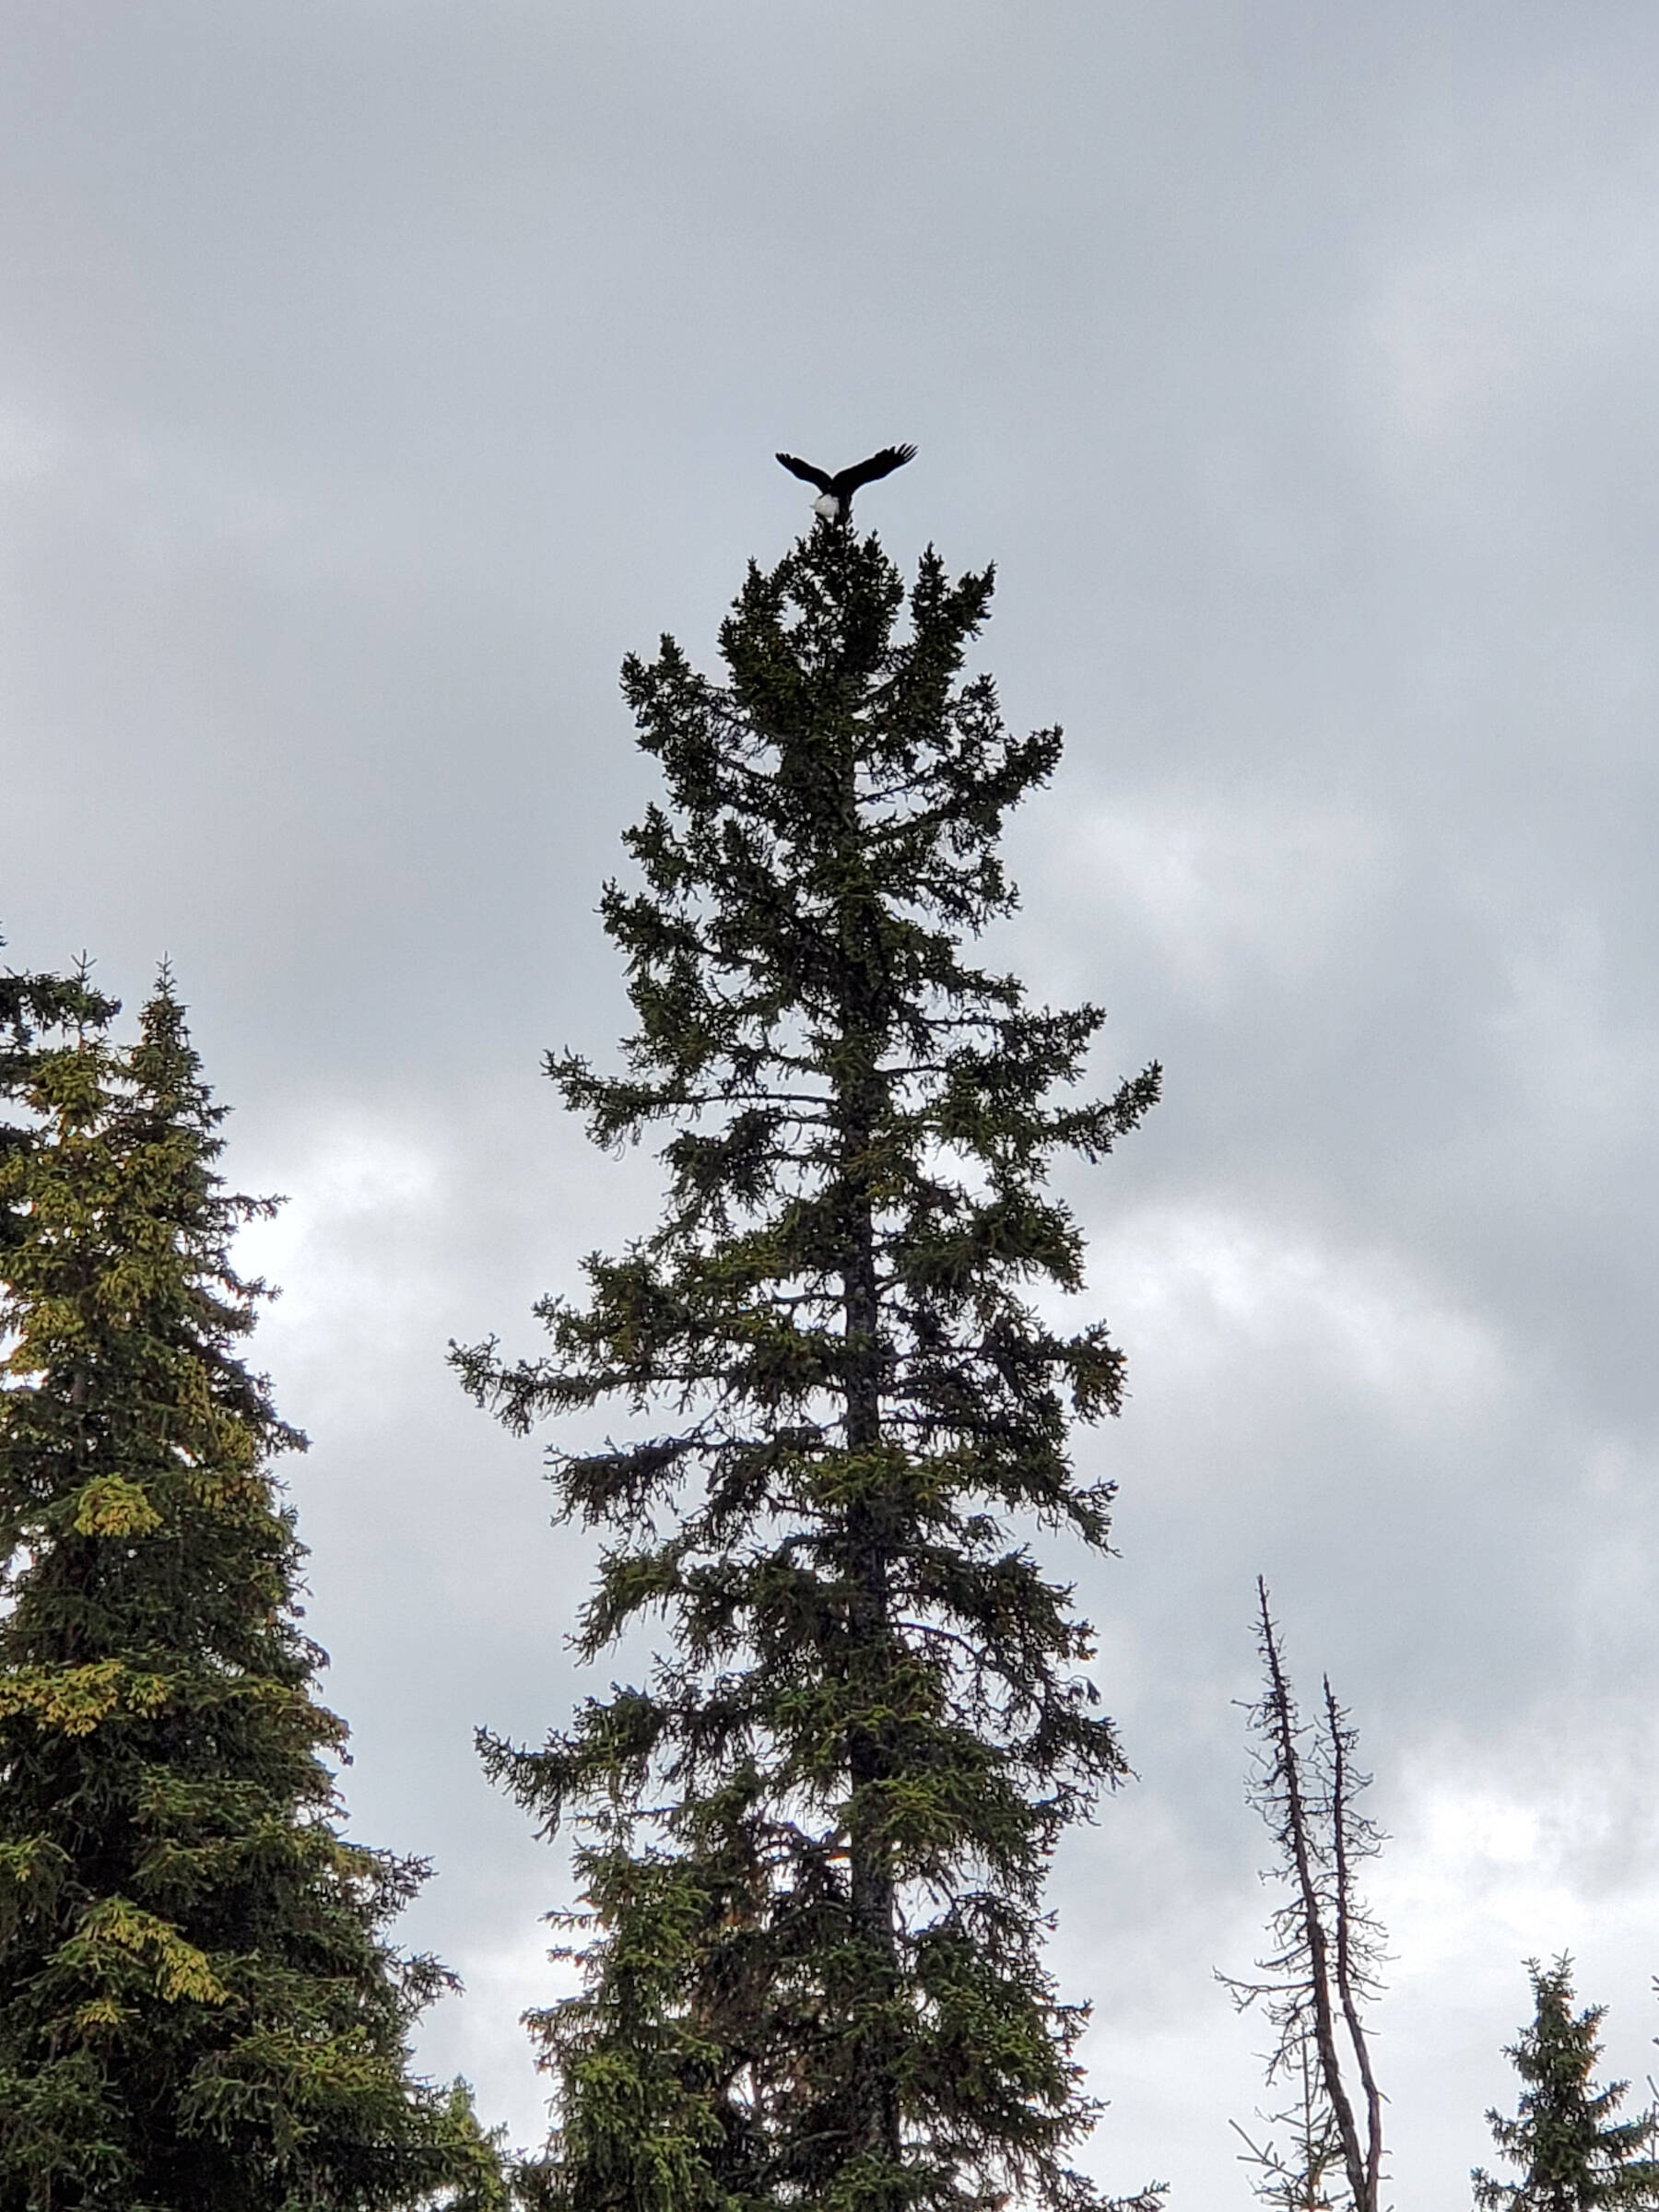 A bald eagle alights on a tall spruce tree on Friday, Aug. 25, 2023 in Anchor Point, Alaska. (Delcenia Cosman/Homer News)